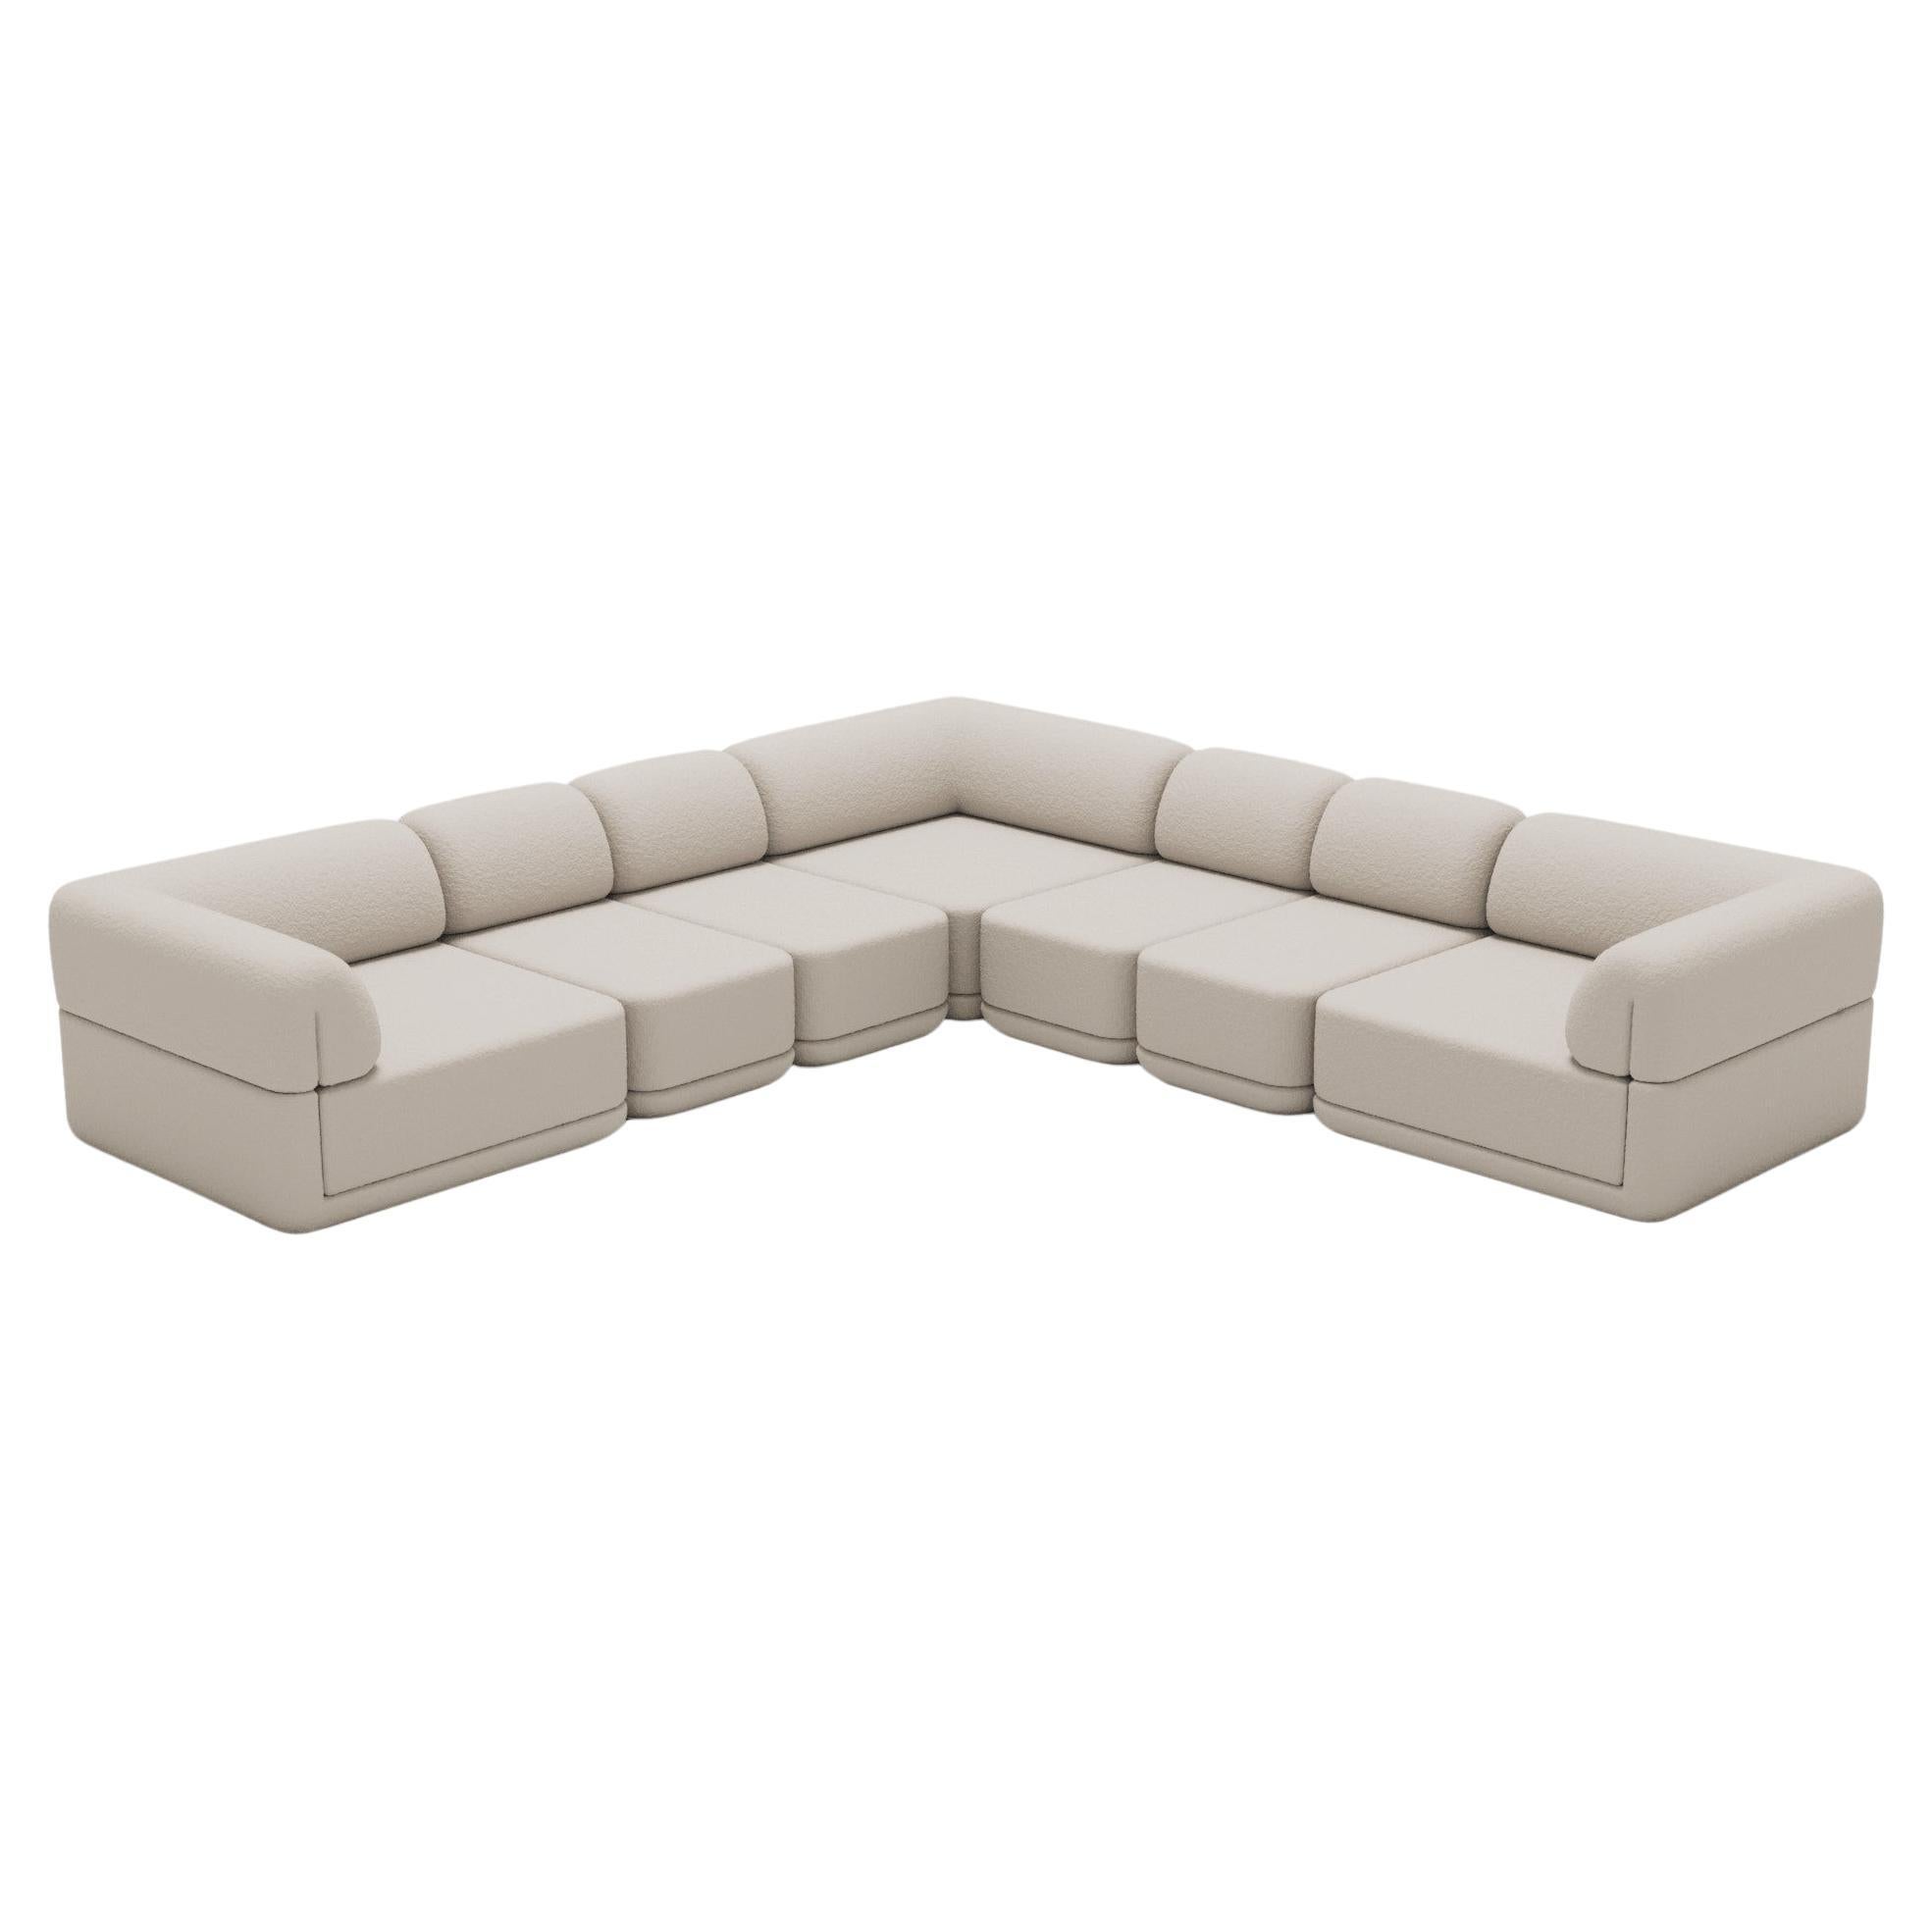 The Cube Sofa - Corner Slim Sectional